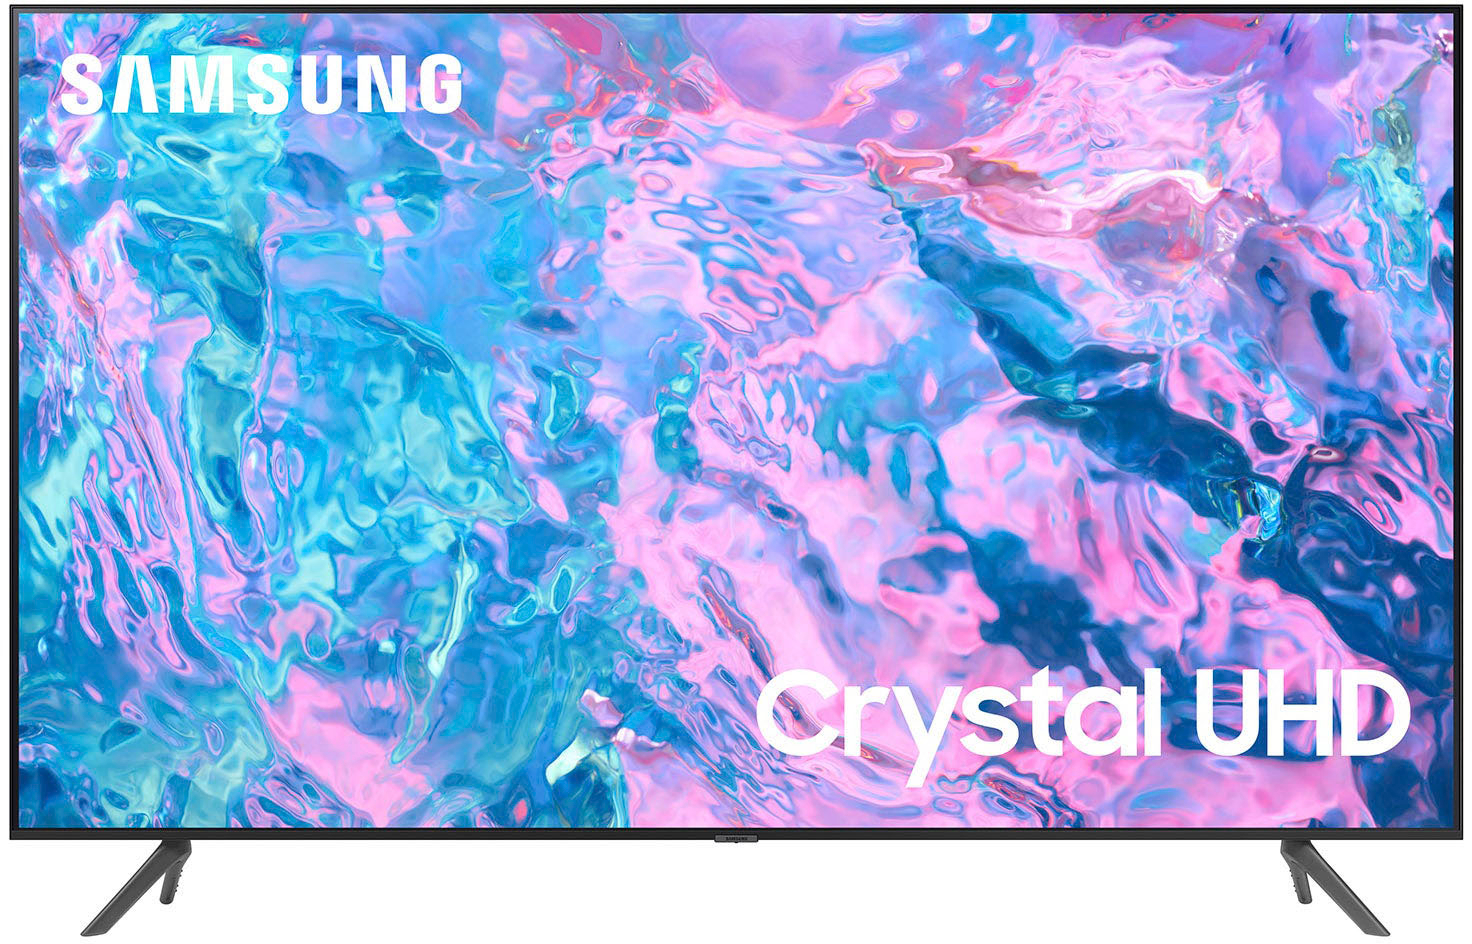 Best Buy: Samsung 60 Class LED 1080p 120Hz Smart HDTV UN60D6000S